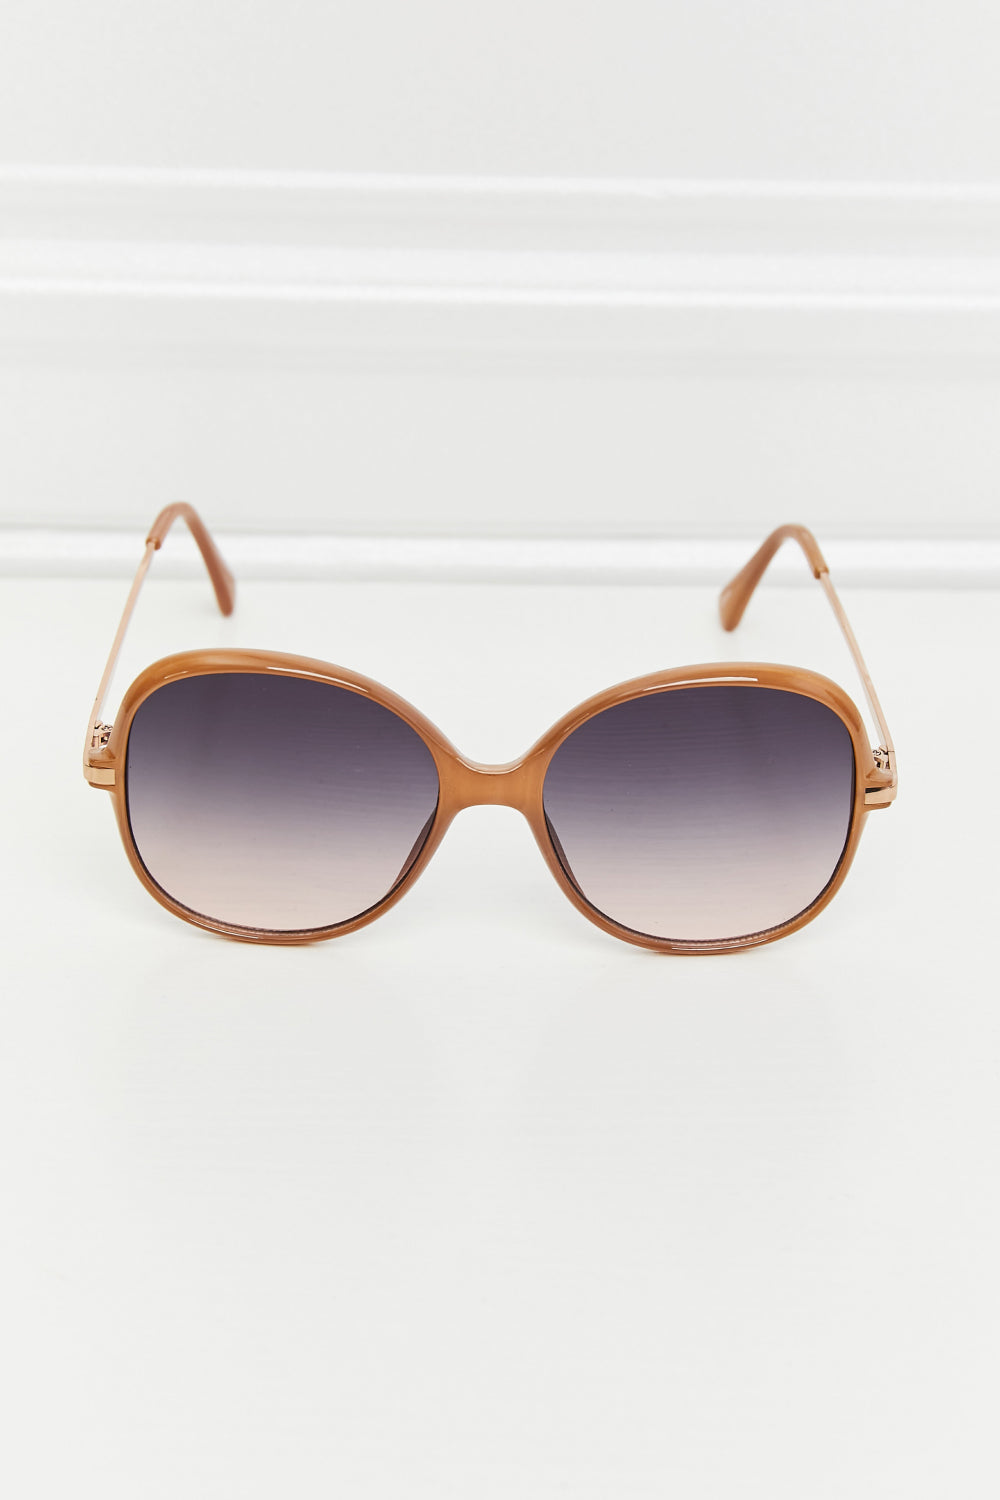 Metal-Plastic Hybrid Full Rim Sunglasses One Size Sunglasses by Vim&Vigor | Vim&Vigor Boutique